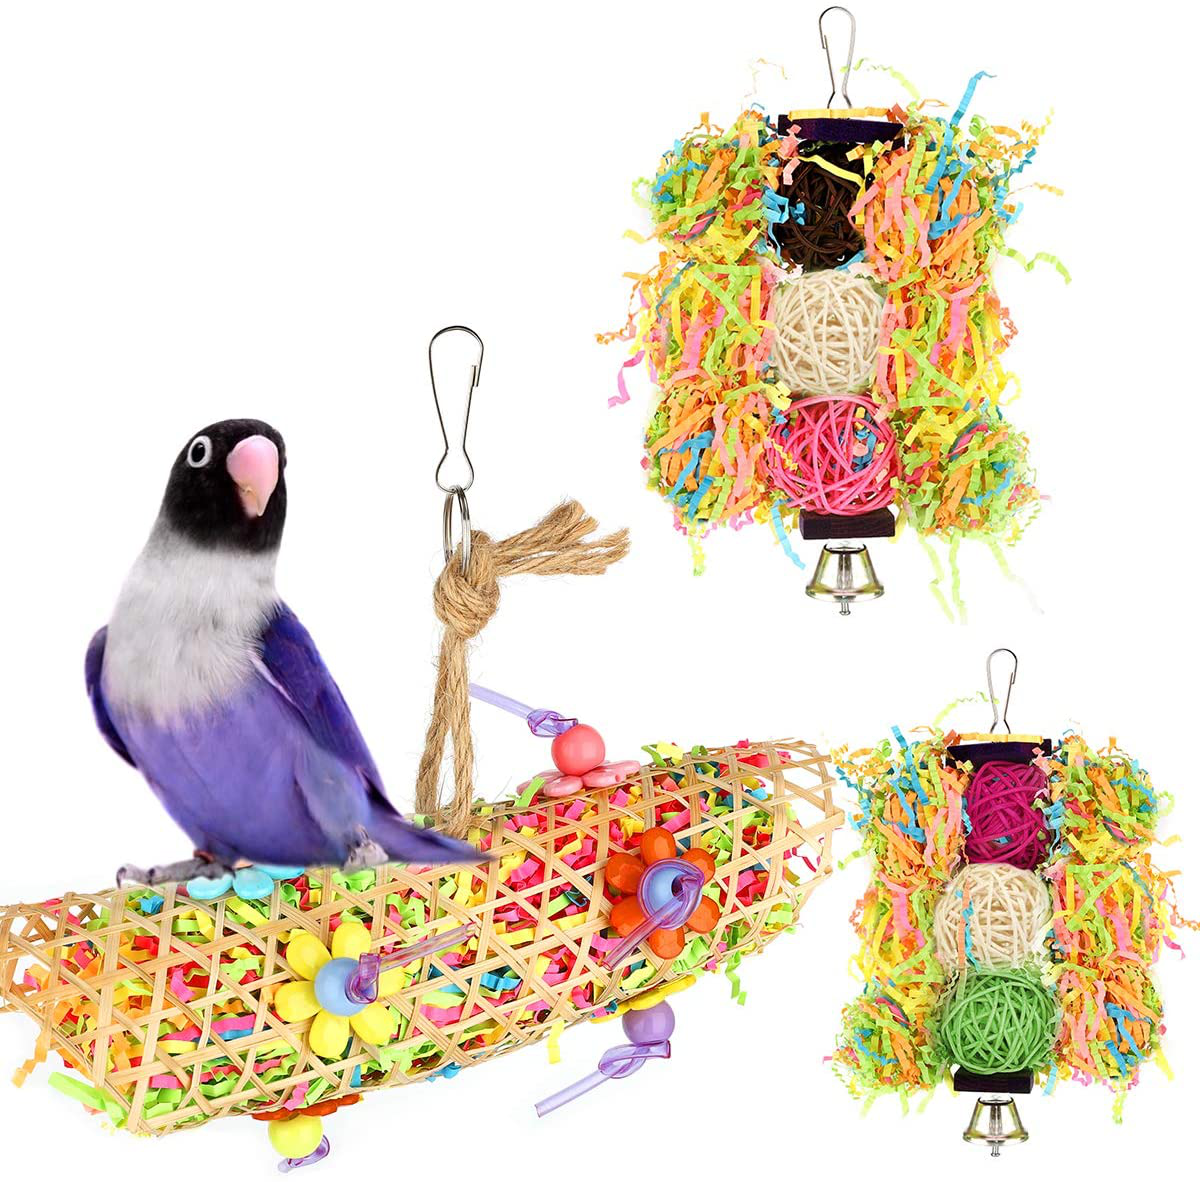 Pawaboo Bird Parrot Toys 3 Packs, Bird Chewing Foraging Shredder Toy Bird Cage Hammock Hanging Swing with Bells for Small Bird, Parakeets, Cockatiels, Conures, Budgie, Lovebirds, Hummingbird